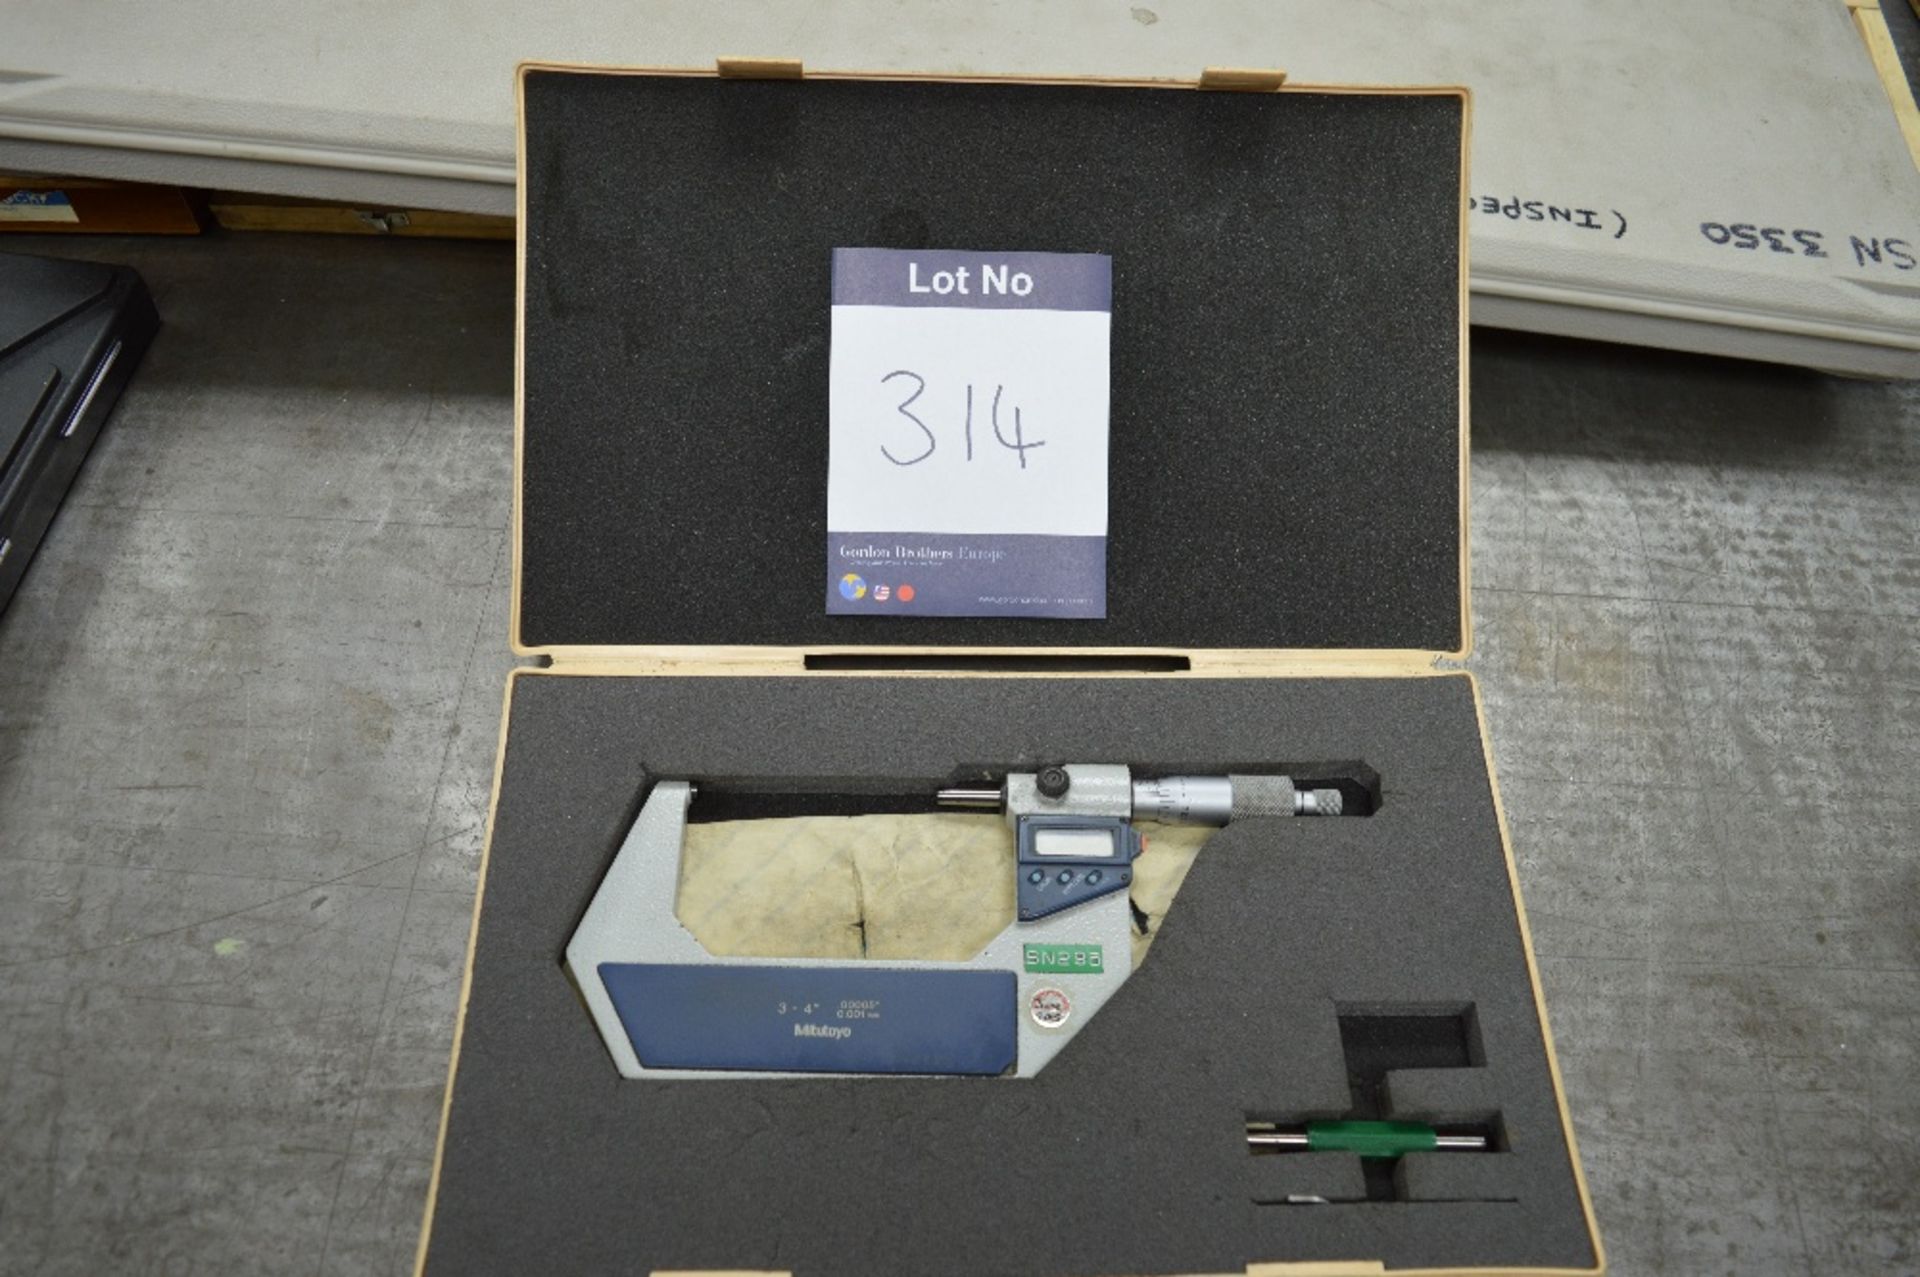 Mitutoyo 3-4" Digital Micrometer
Serial Number: 00